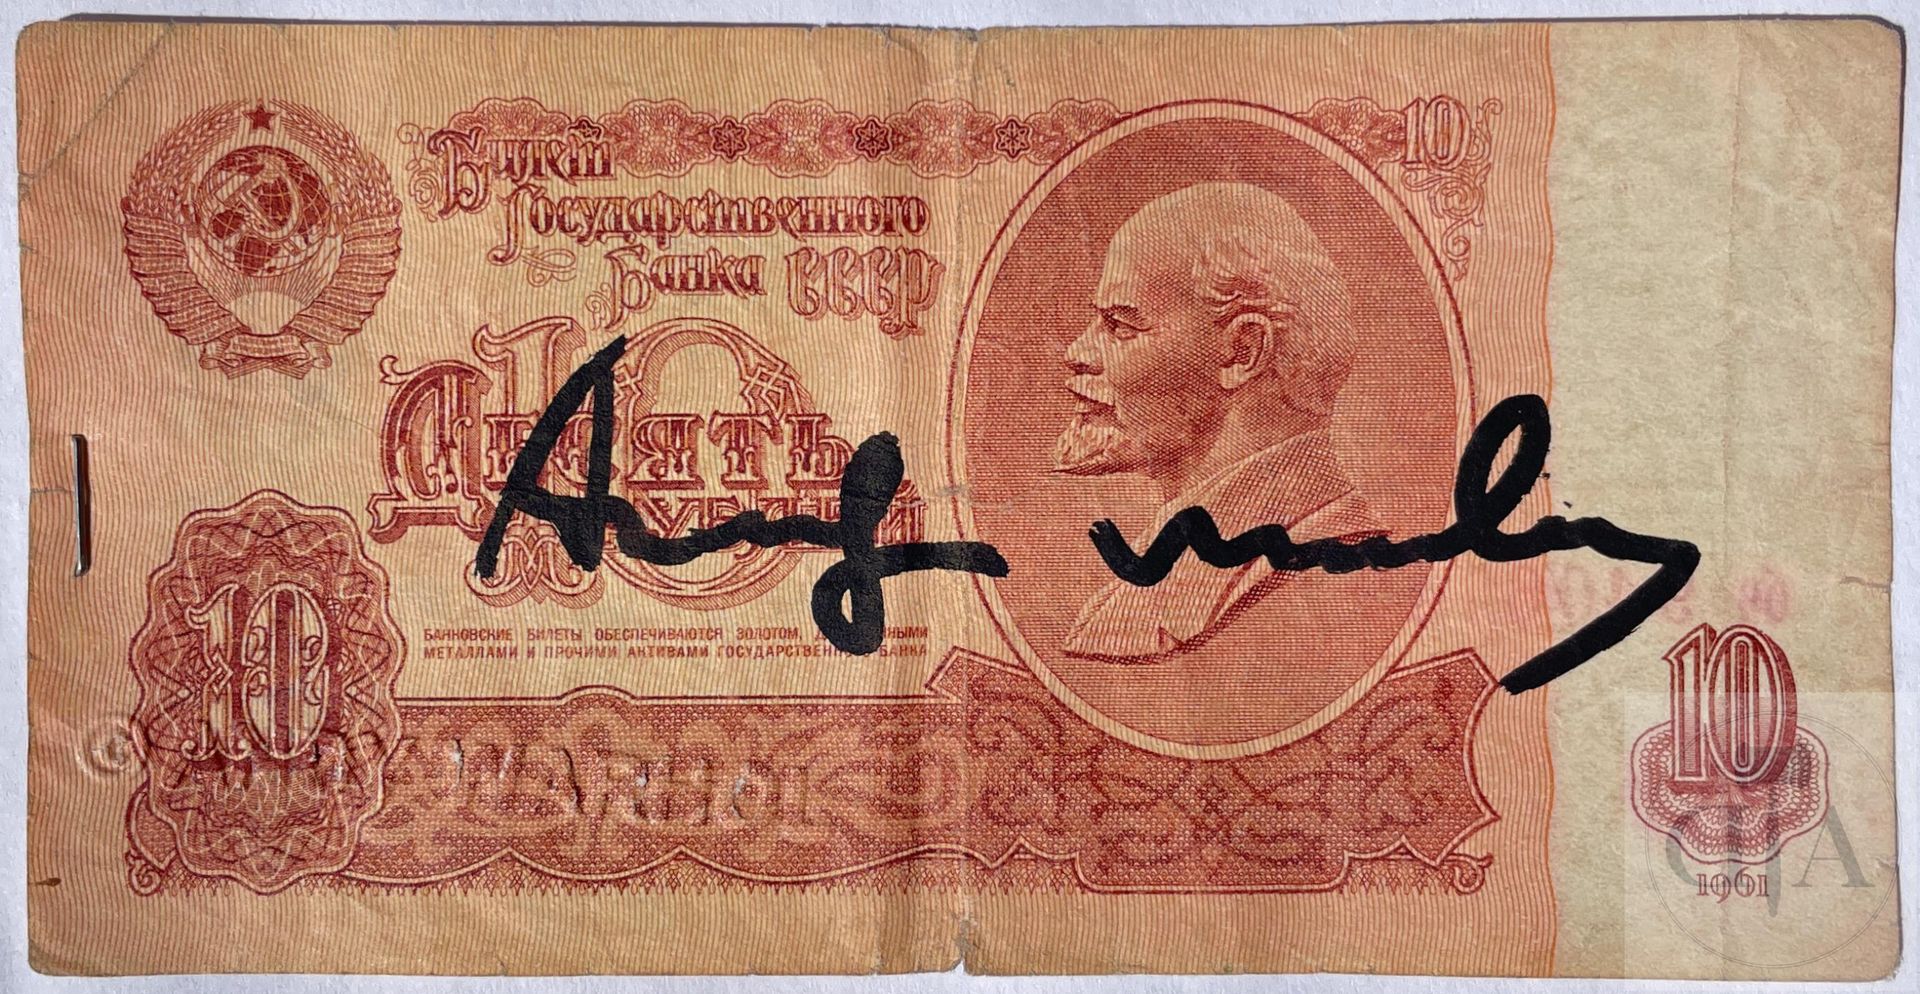 Null 安迪-沃霍尔/原创作品 "测试签名美元"。 一张由艺术家签名的俄罗斯10卢布纸币 "1961系列"。 背面有艺术家遗产的印章+苏富比的保证章，有参考价&hellip;